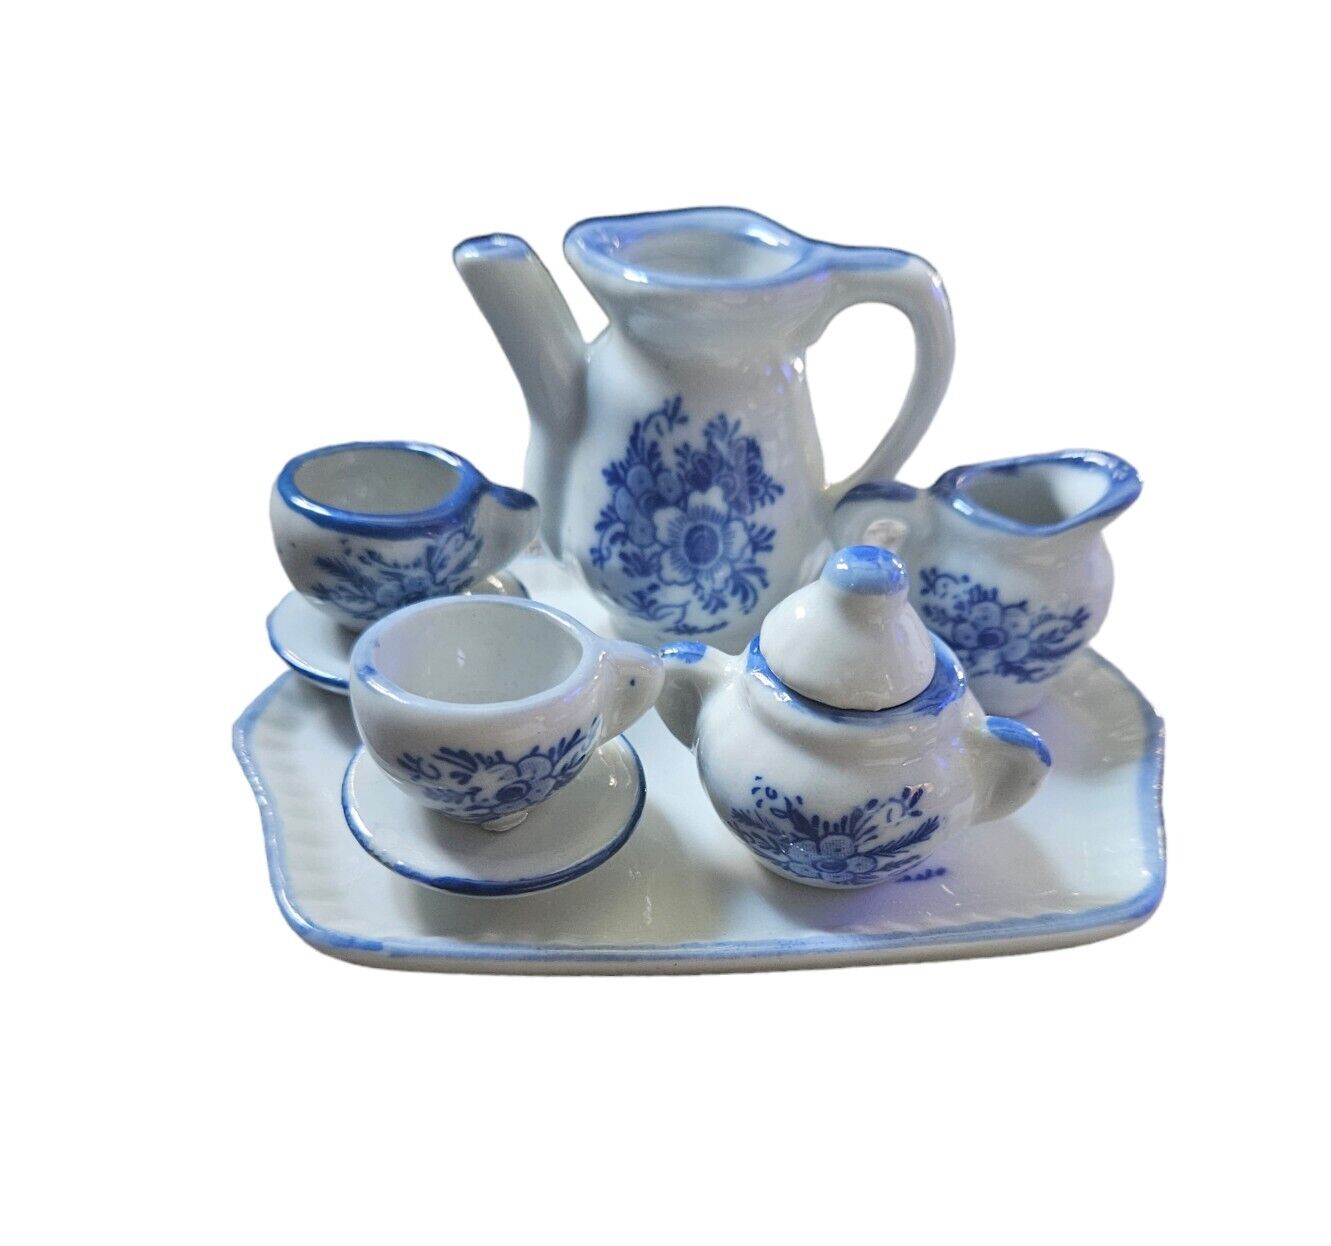 Vintage Miniature Porcelain Collectible Tea Set White With Blue Flowers